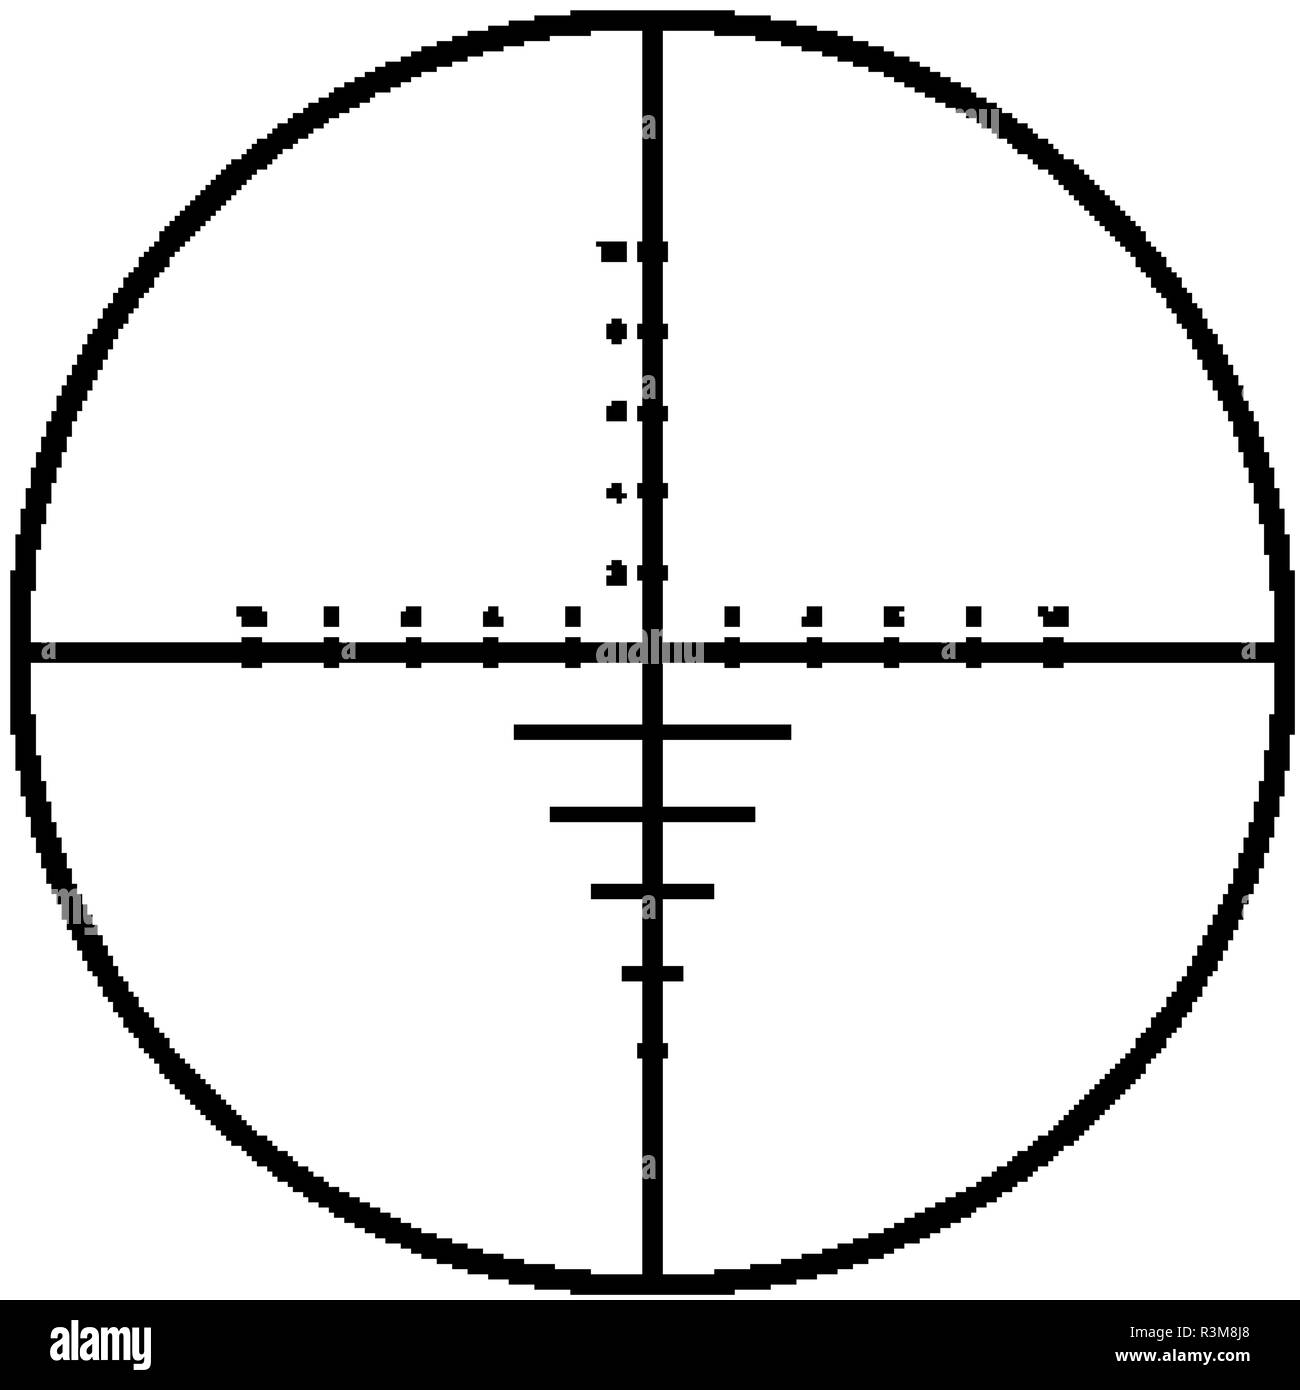 Military sniper rifle scope collimator sight icon Stock Vector